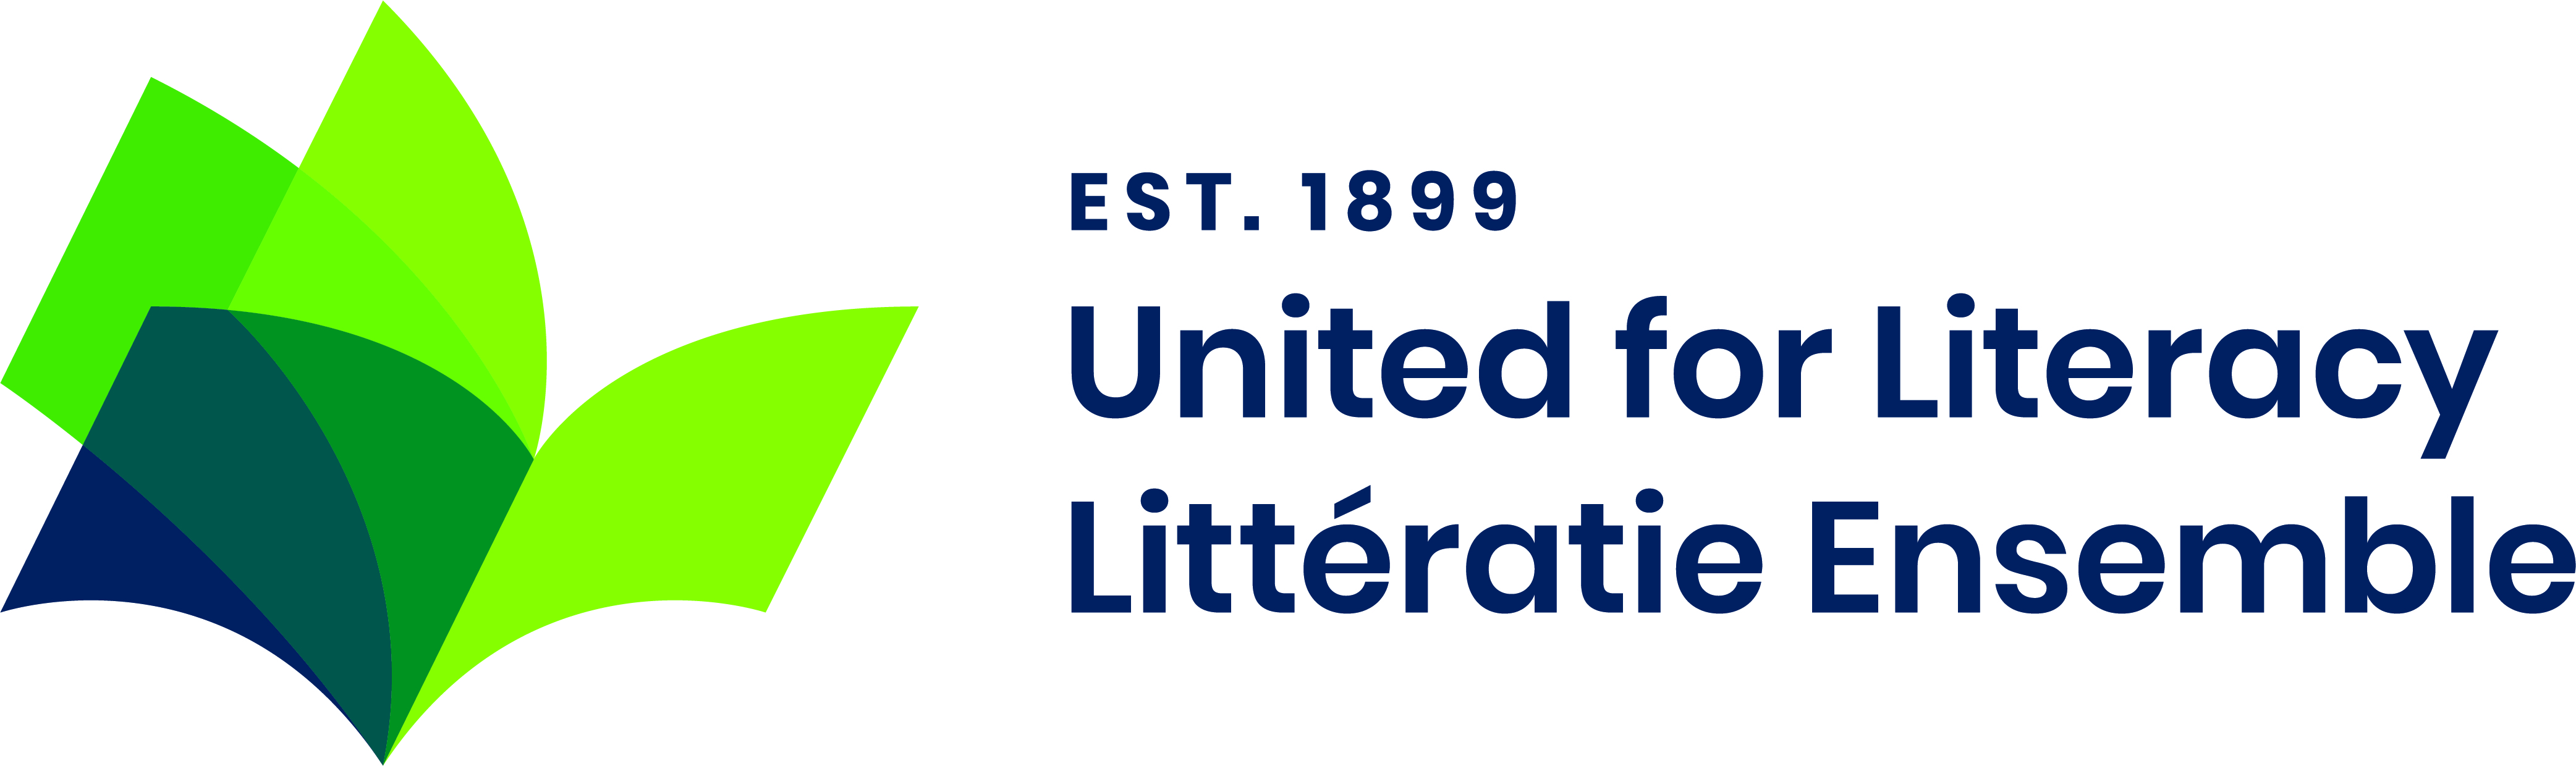 United for Literacy logo - ENGLISH.jpg